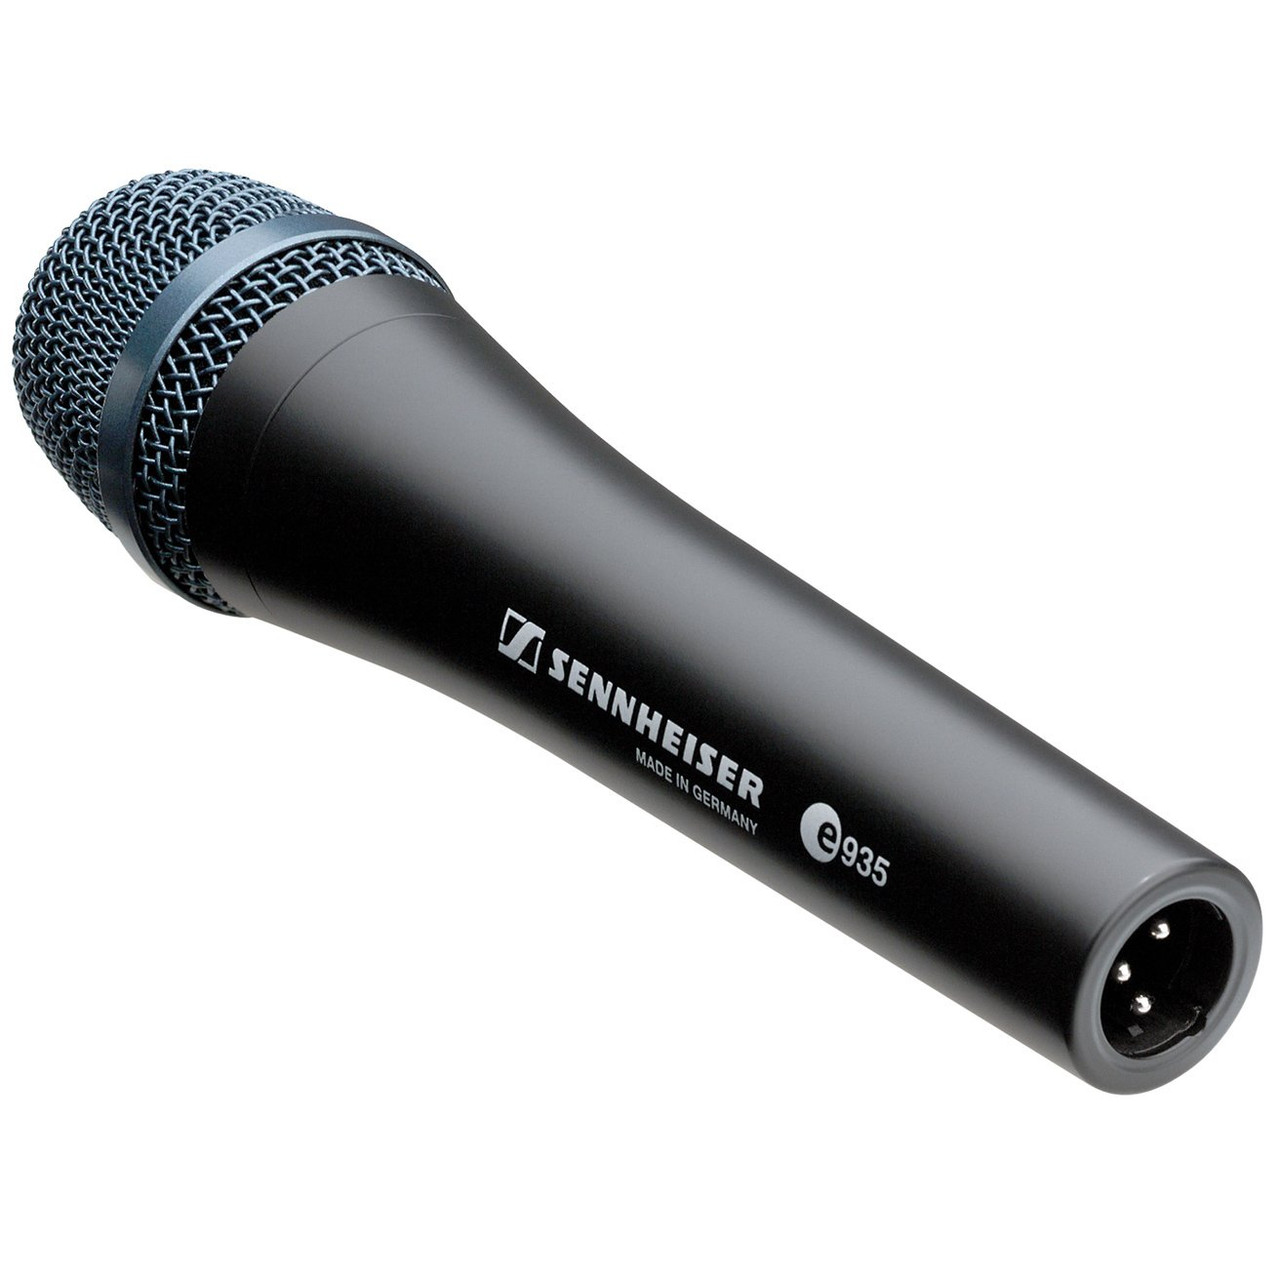 Sennheiser e935 Dynamic Cardioid Vocal Handheld Microphone